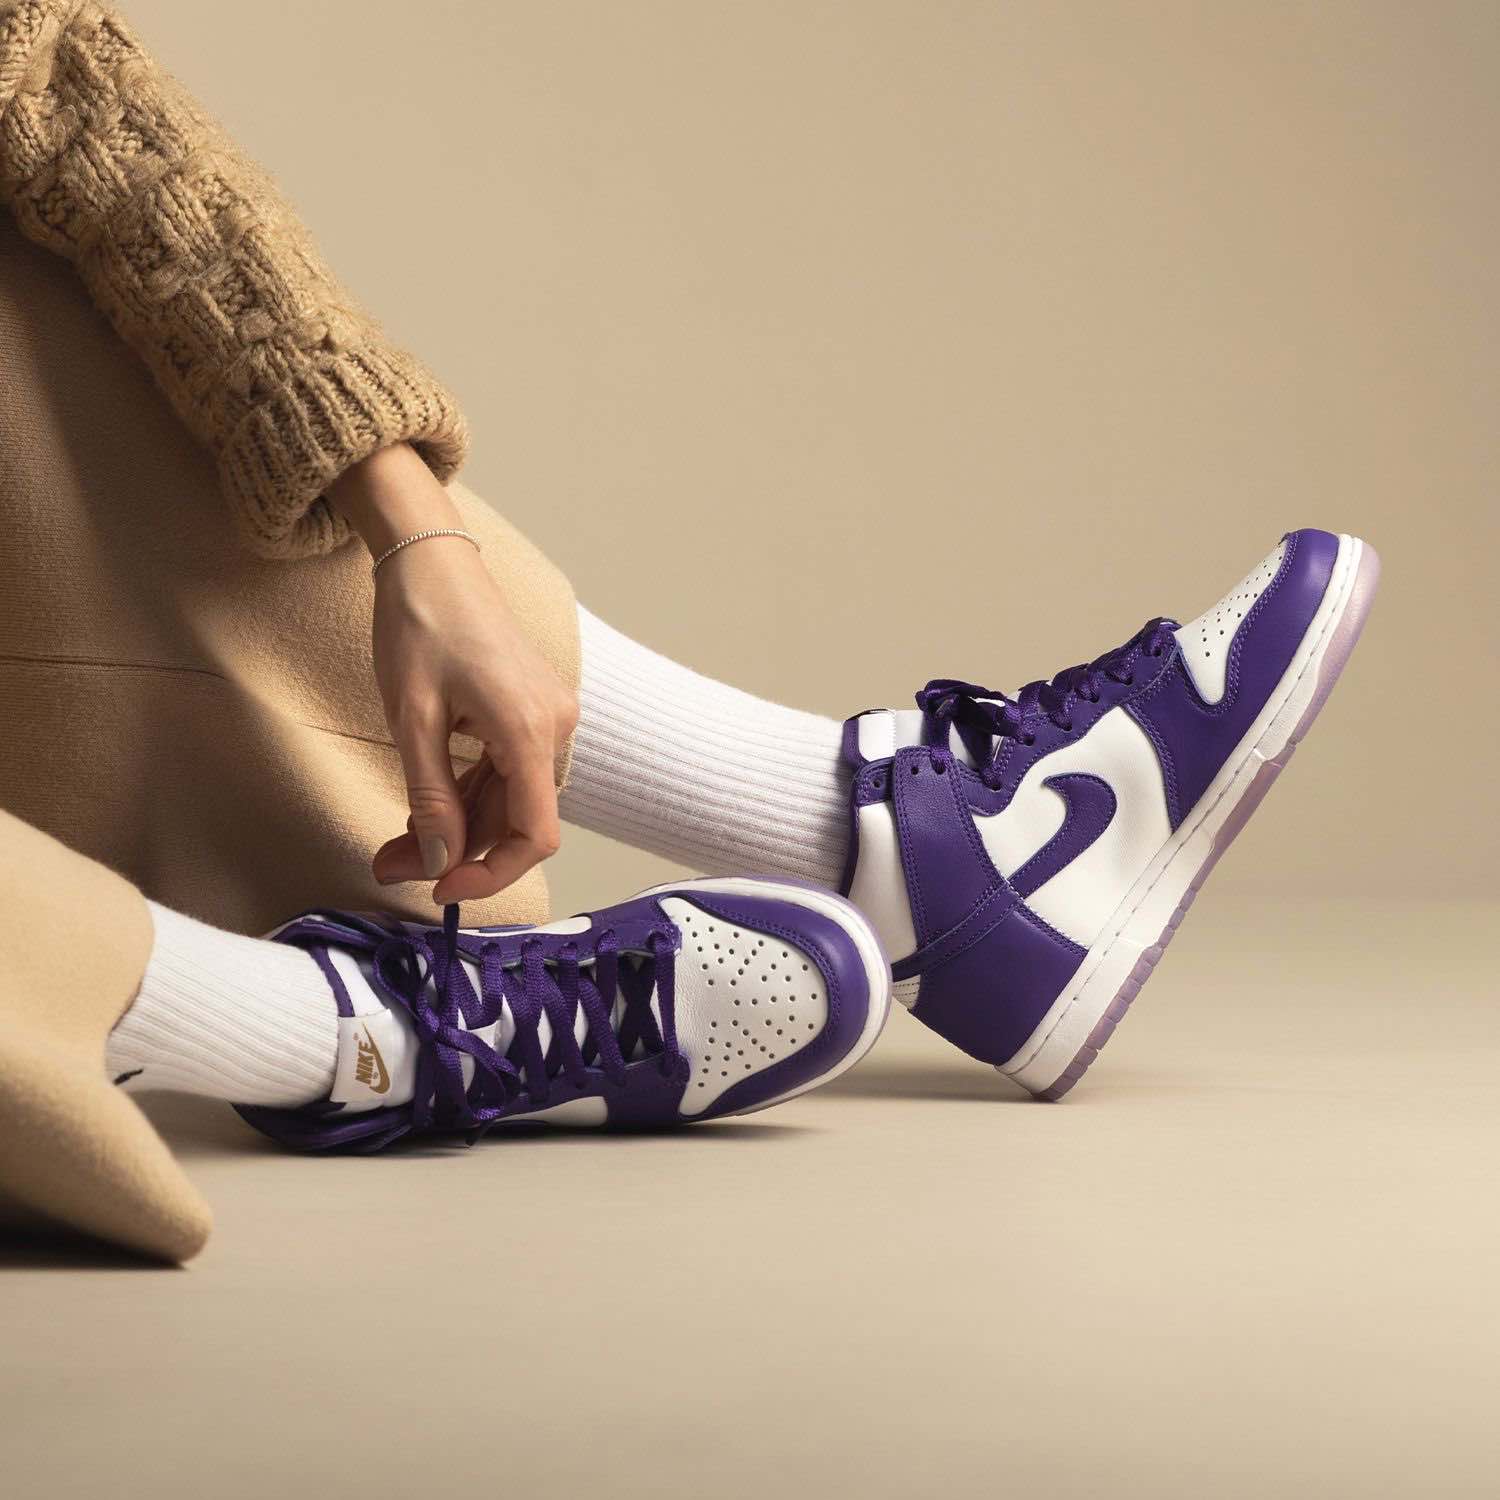 Nike Dunk High
« Varsity Purple »